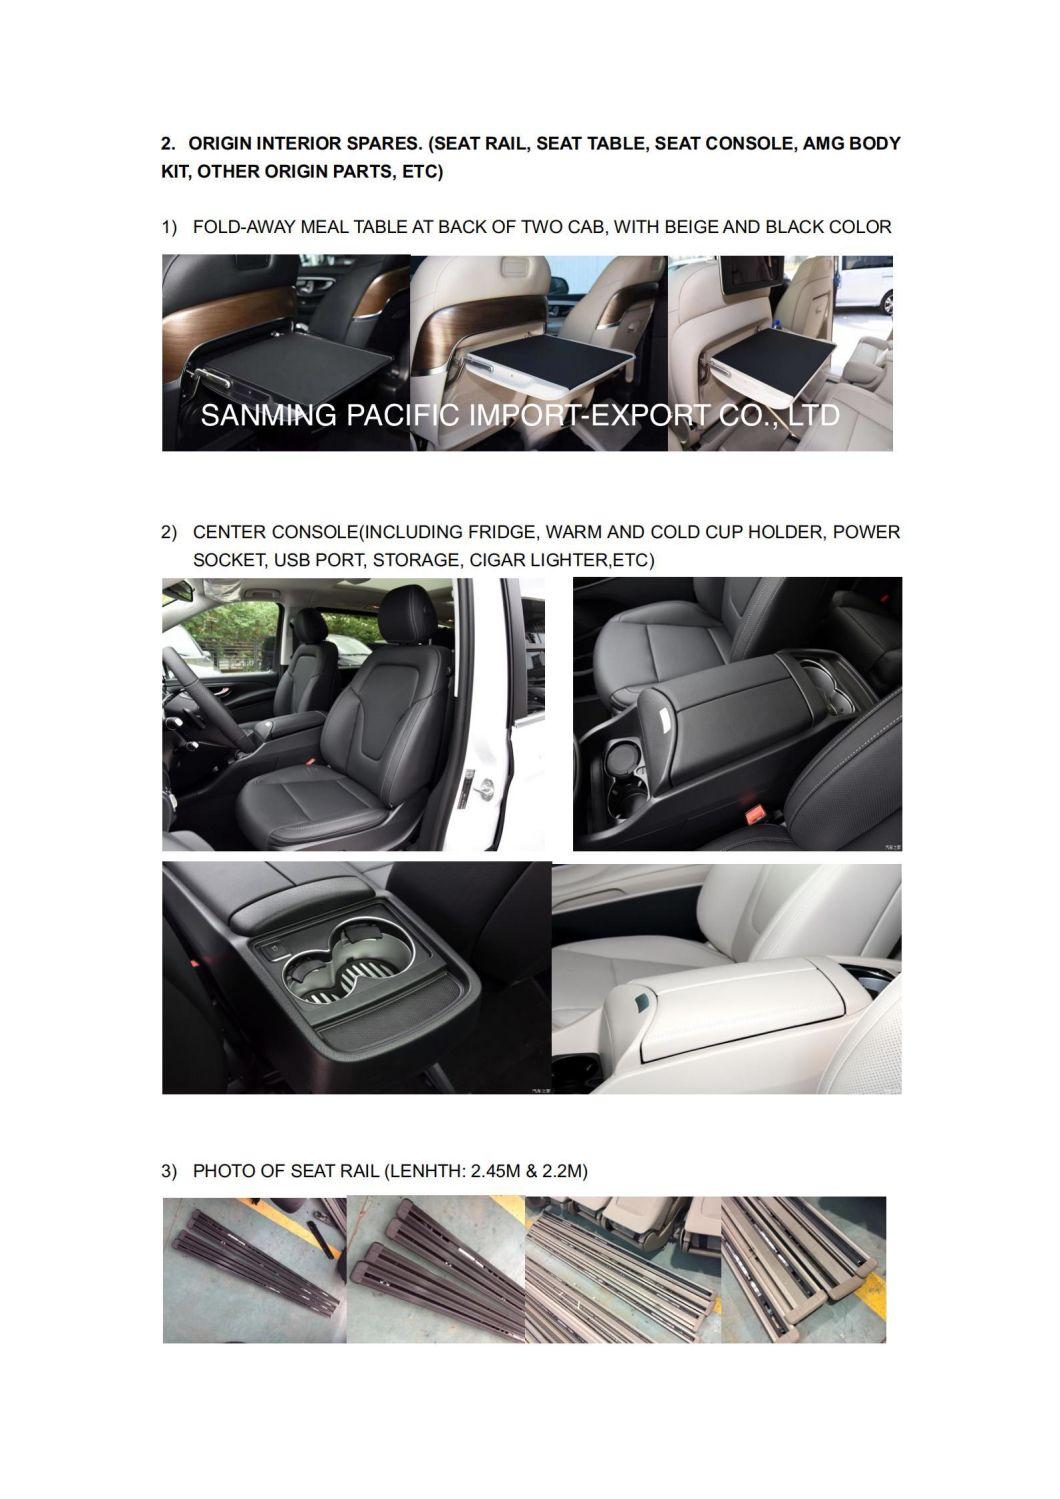 Benz Luxury VIP Seat for Van Conversion